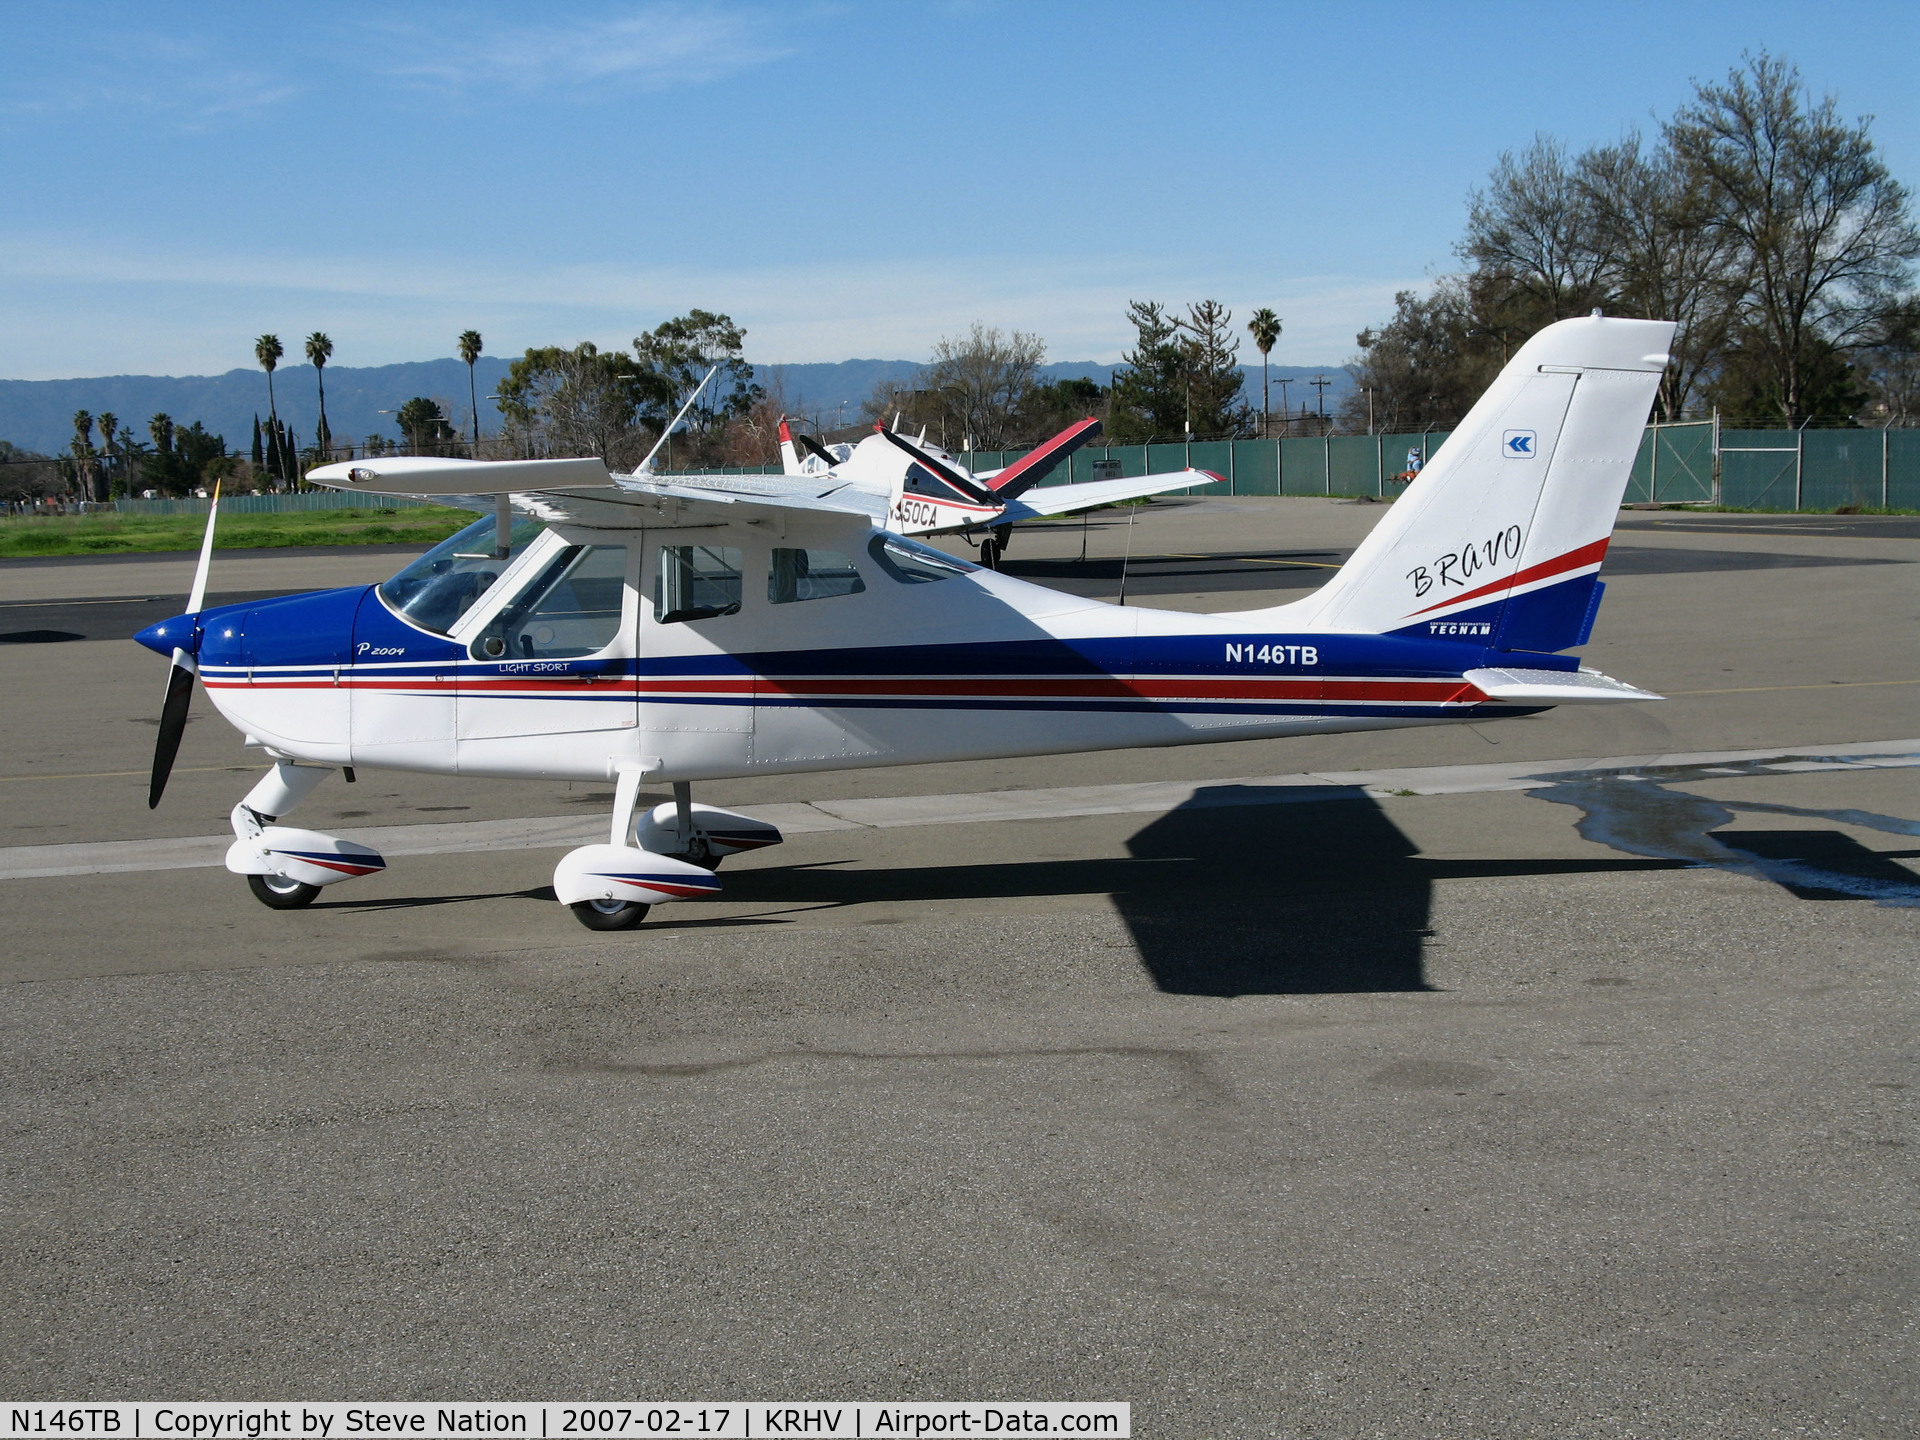 N146TB, 2006 Tecnam P-2004 Bravo C/N 071, Newly imported 2006 Tecnam P-2004 Bravo light sport @ Reid-Hillview Airport (San Jose), CA